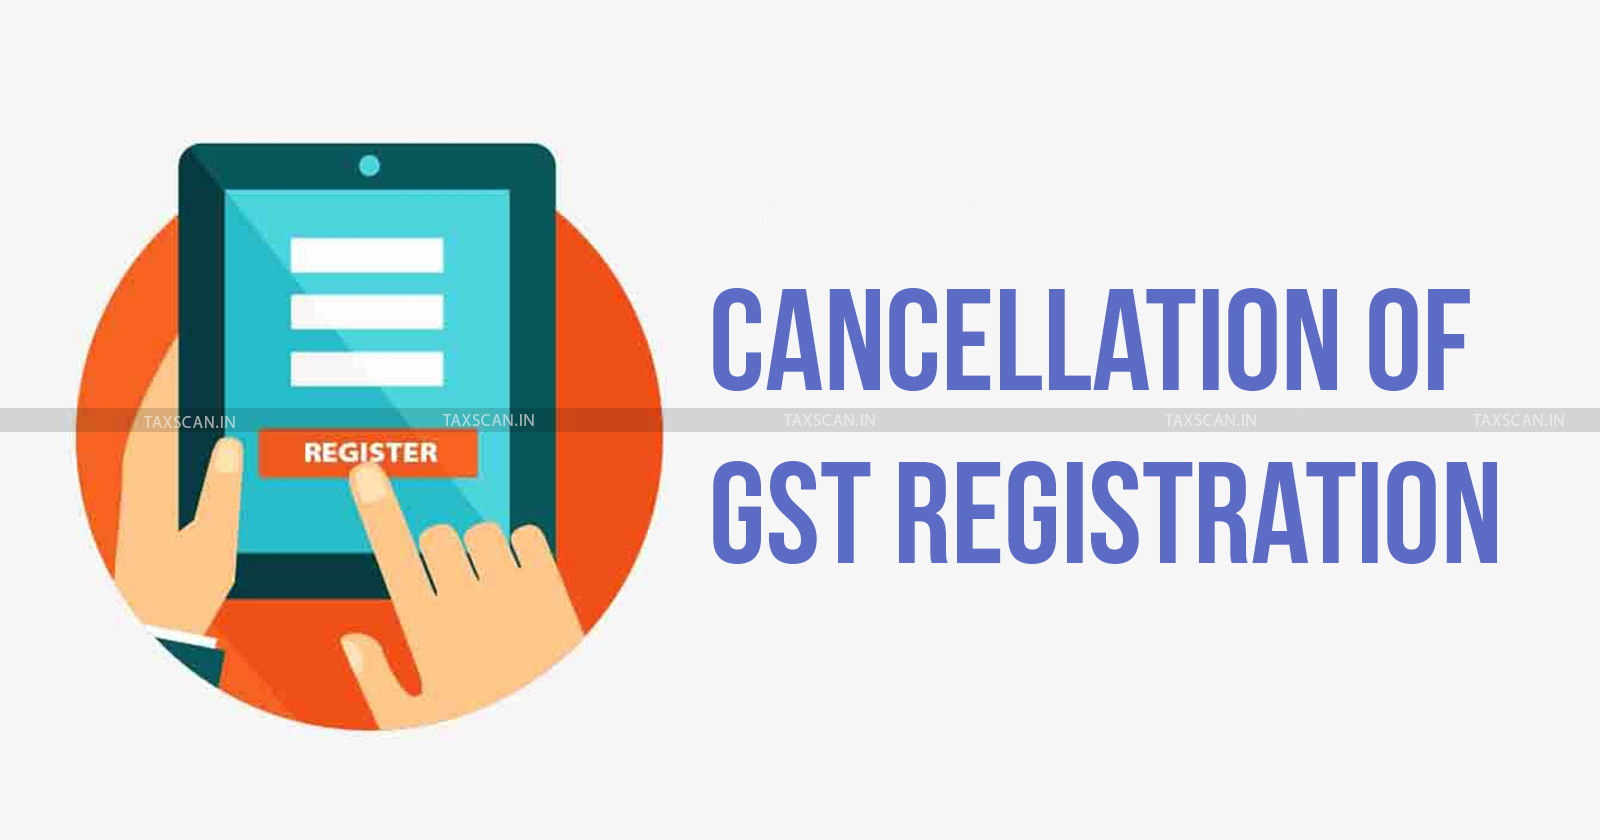 GST - GST Registration - GST Registration Cancellation - Delhi High Court - GST Portal - Input tax credit - taxscan